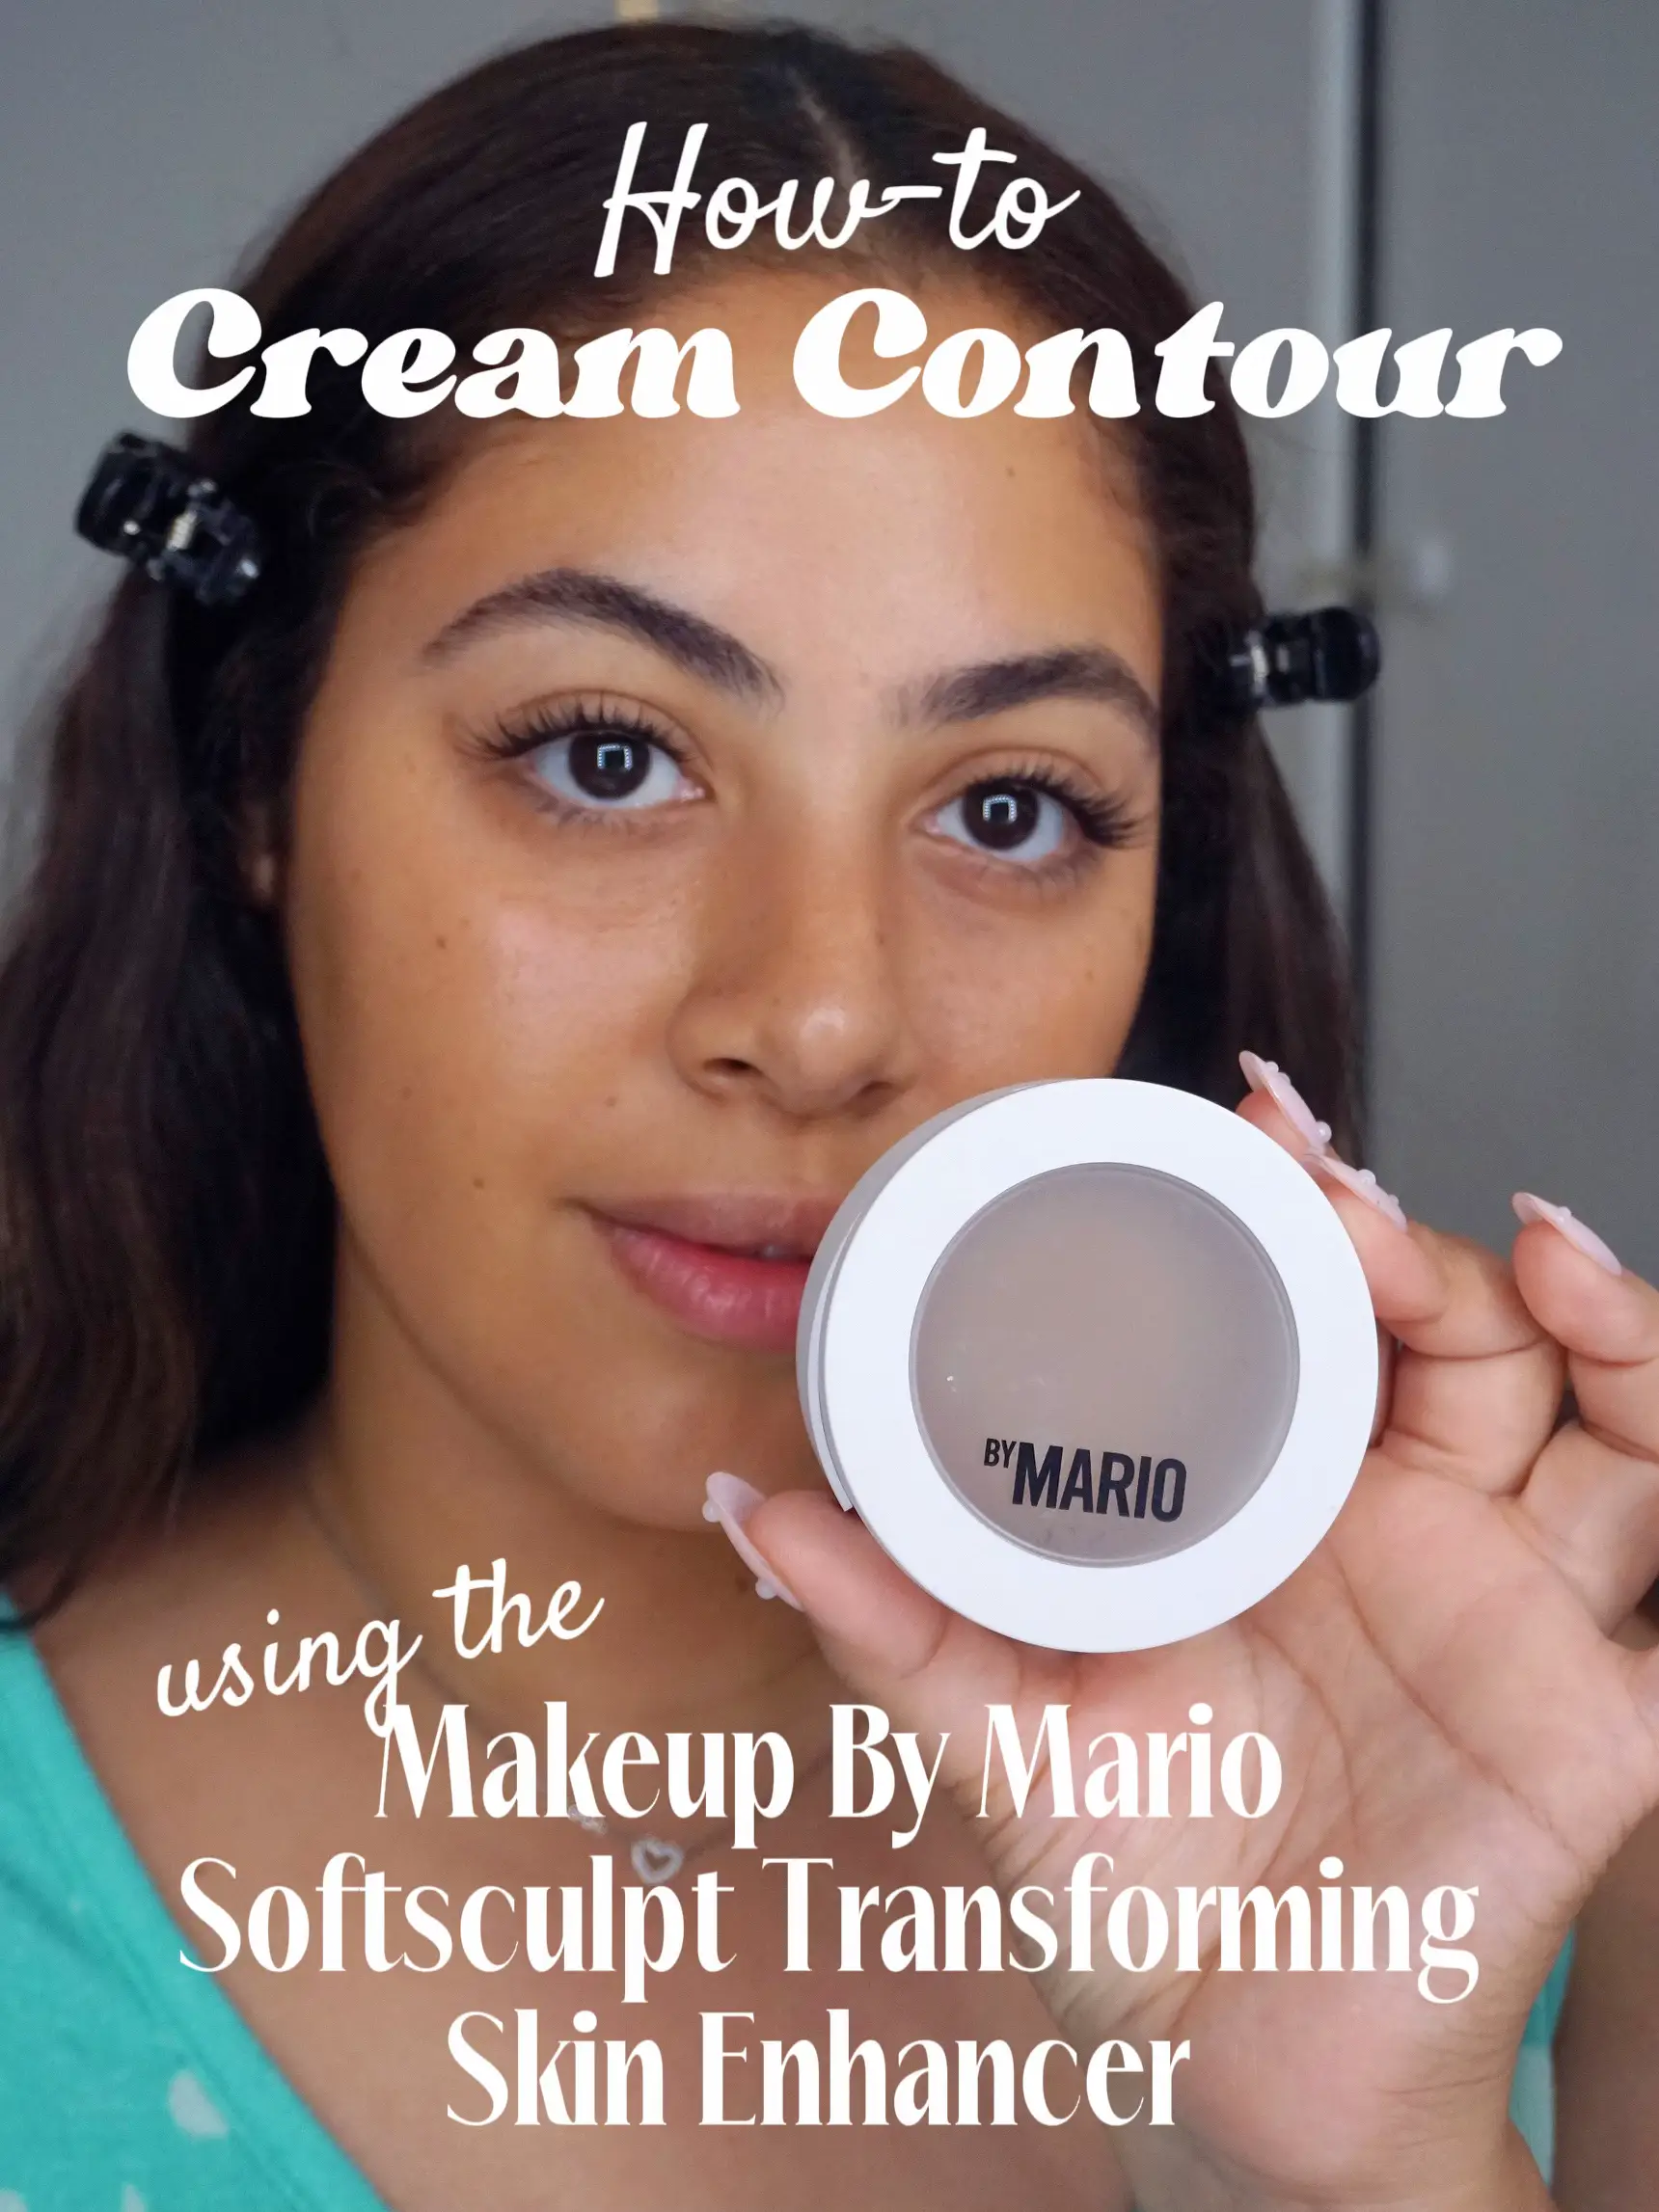 Makeup By Mario SoftSculpt Transforming Skin Perfector & Enhancer Review